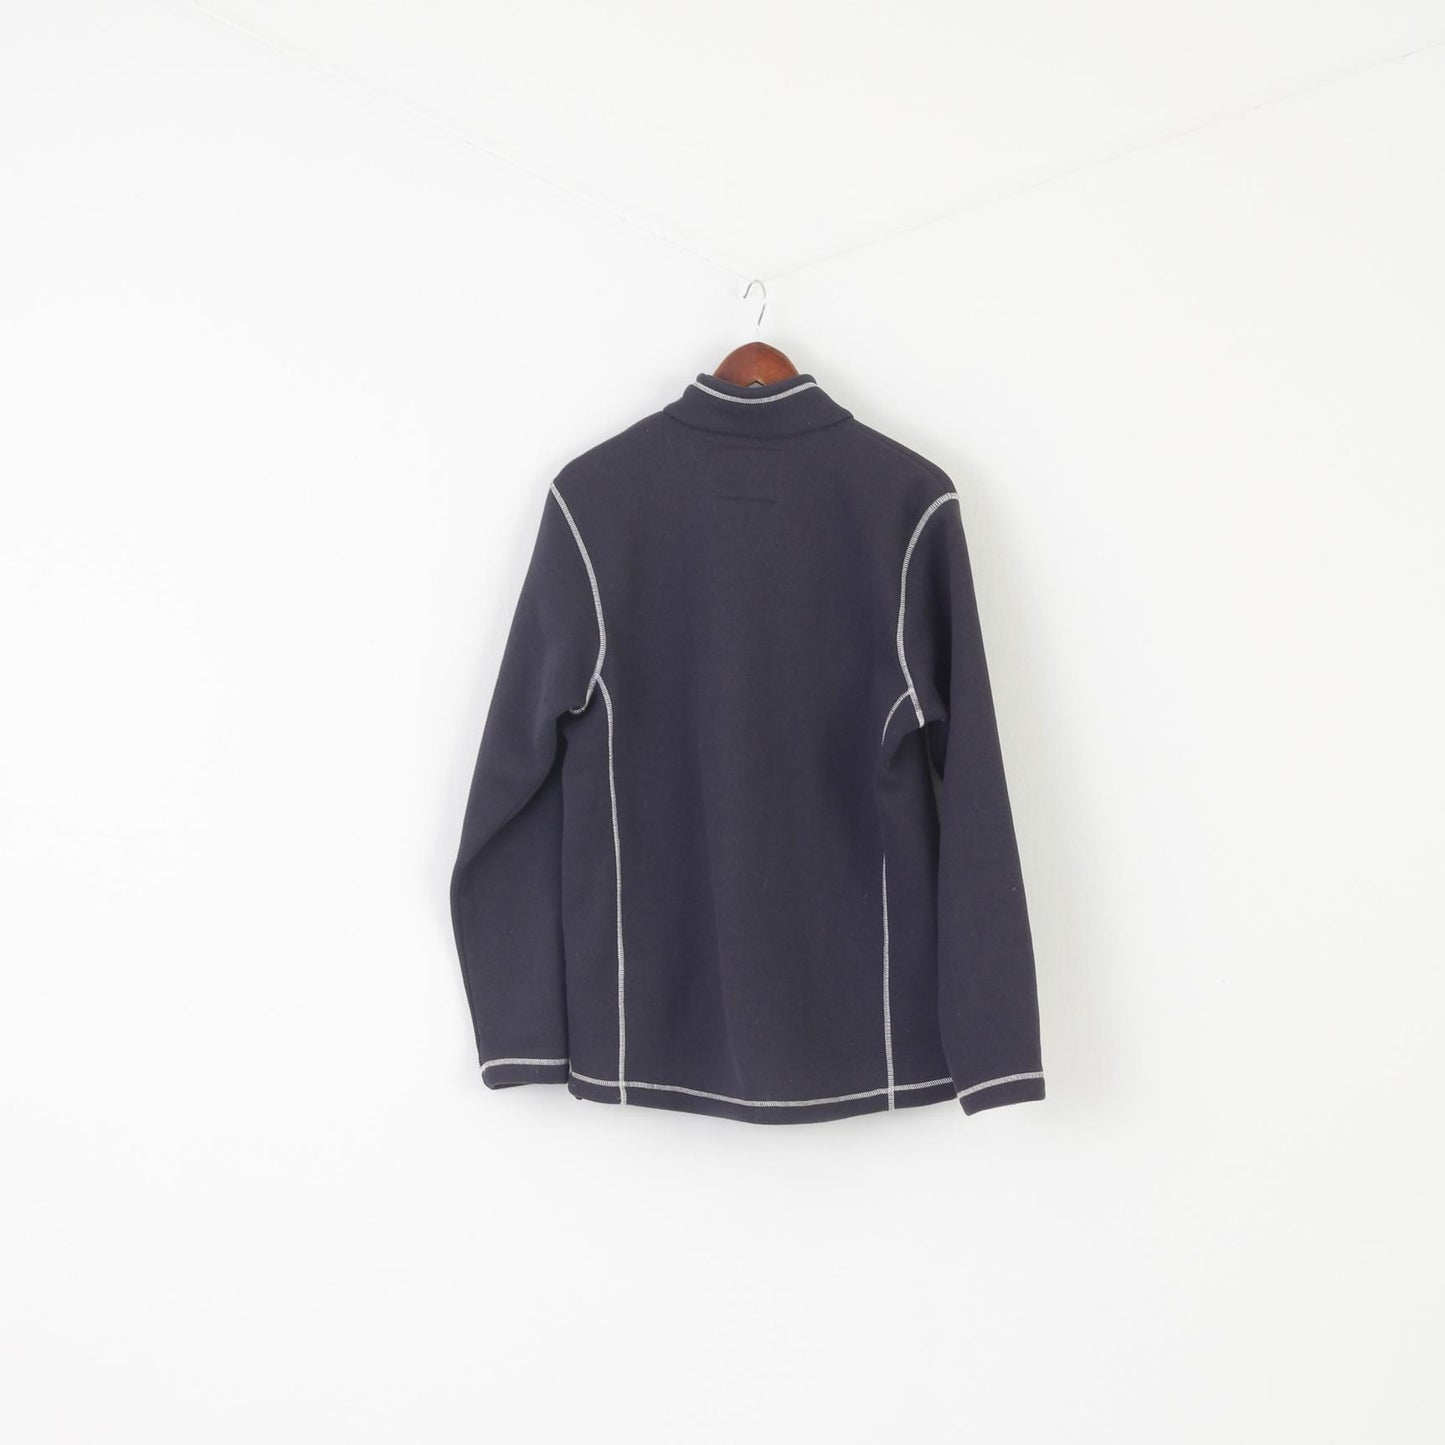 Helly Hansen Workwear Men L Sweatshirt Gray Full Zipper For Extreme Conditions Top